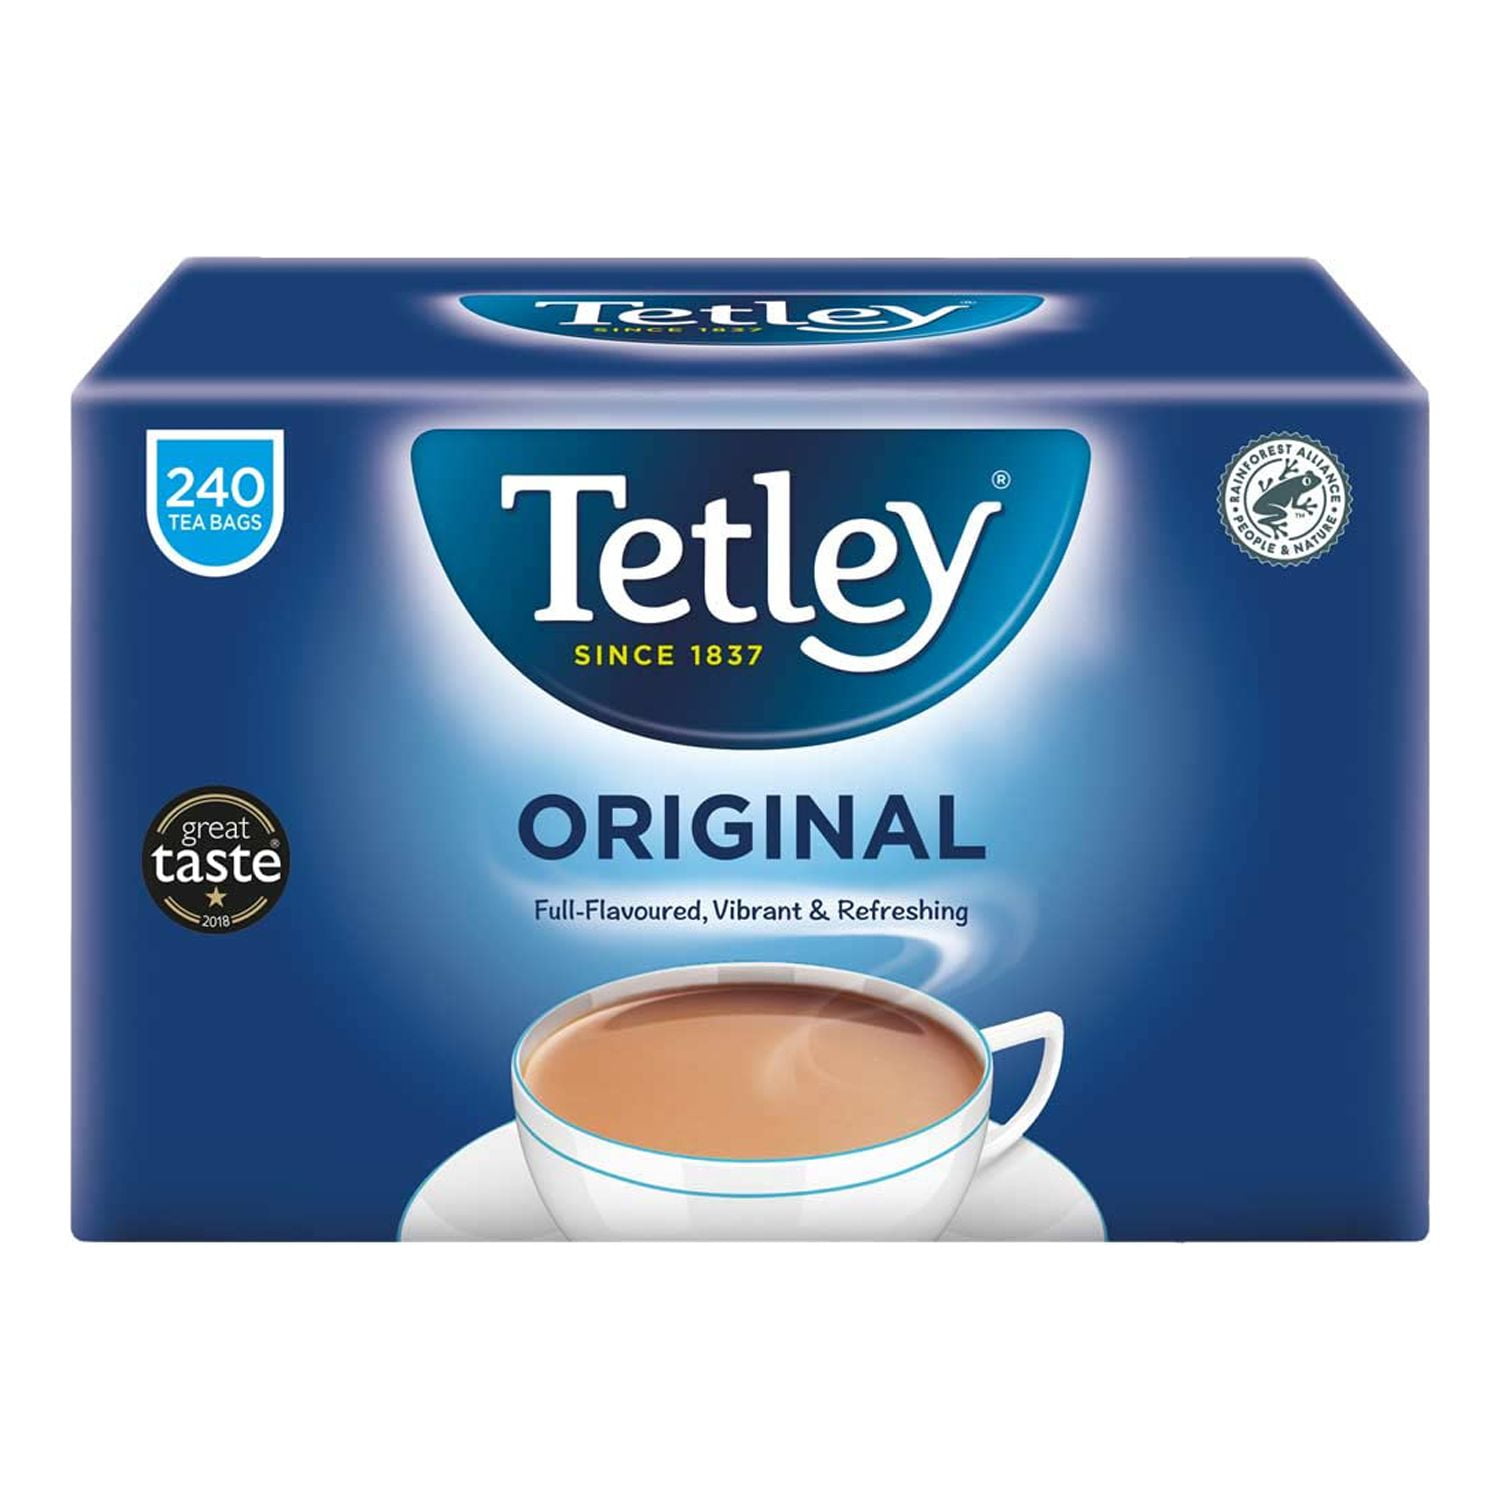 Tetley® Iced Tea Blend Tea Bags Family Size, 24 ct / 6 oz - Kroger